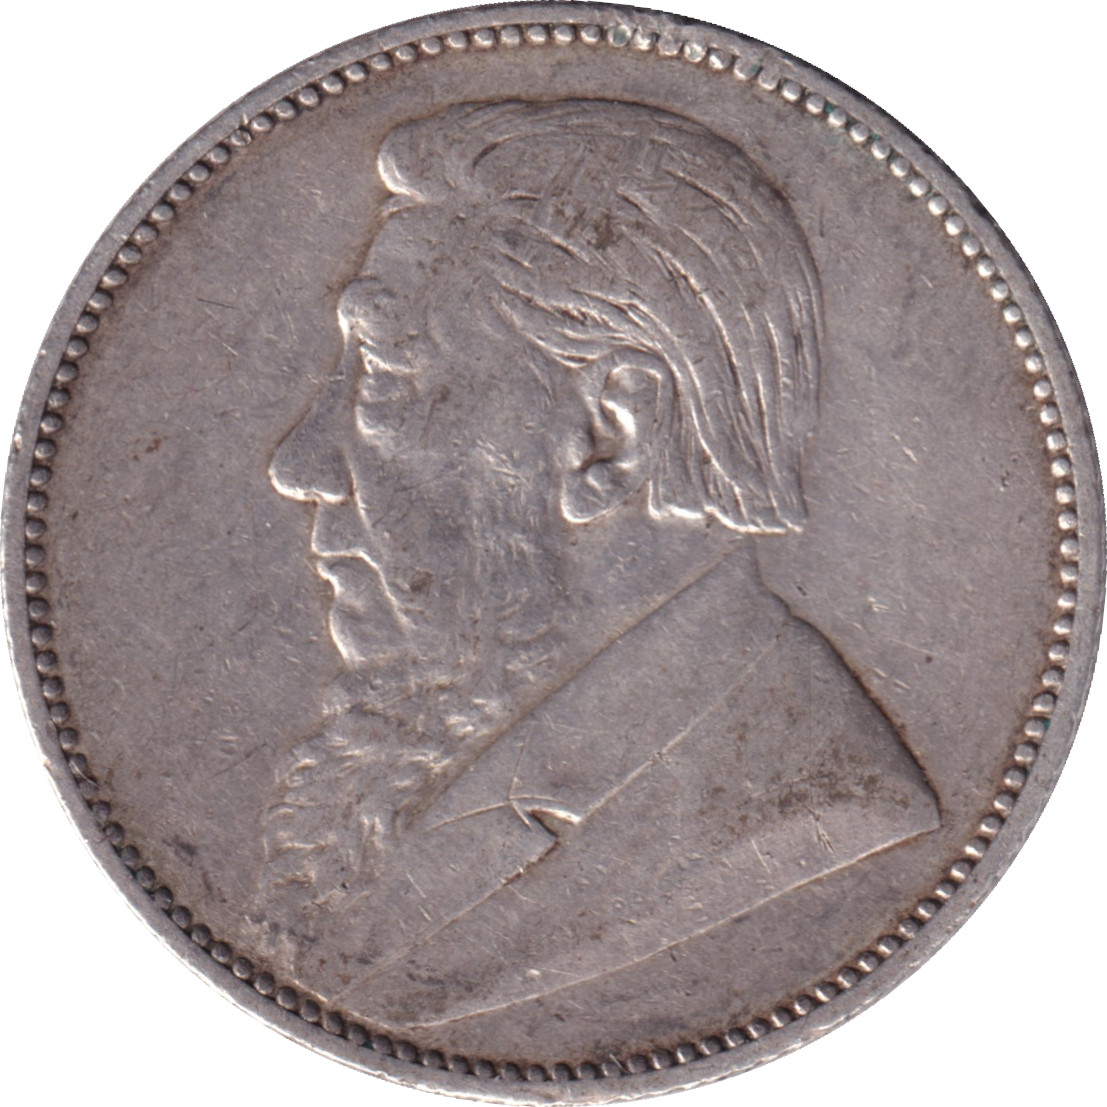 1 shilling - Krugger